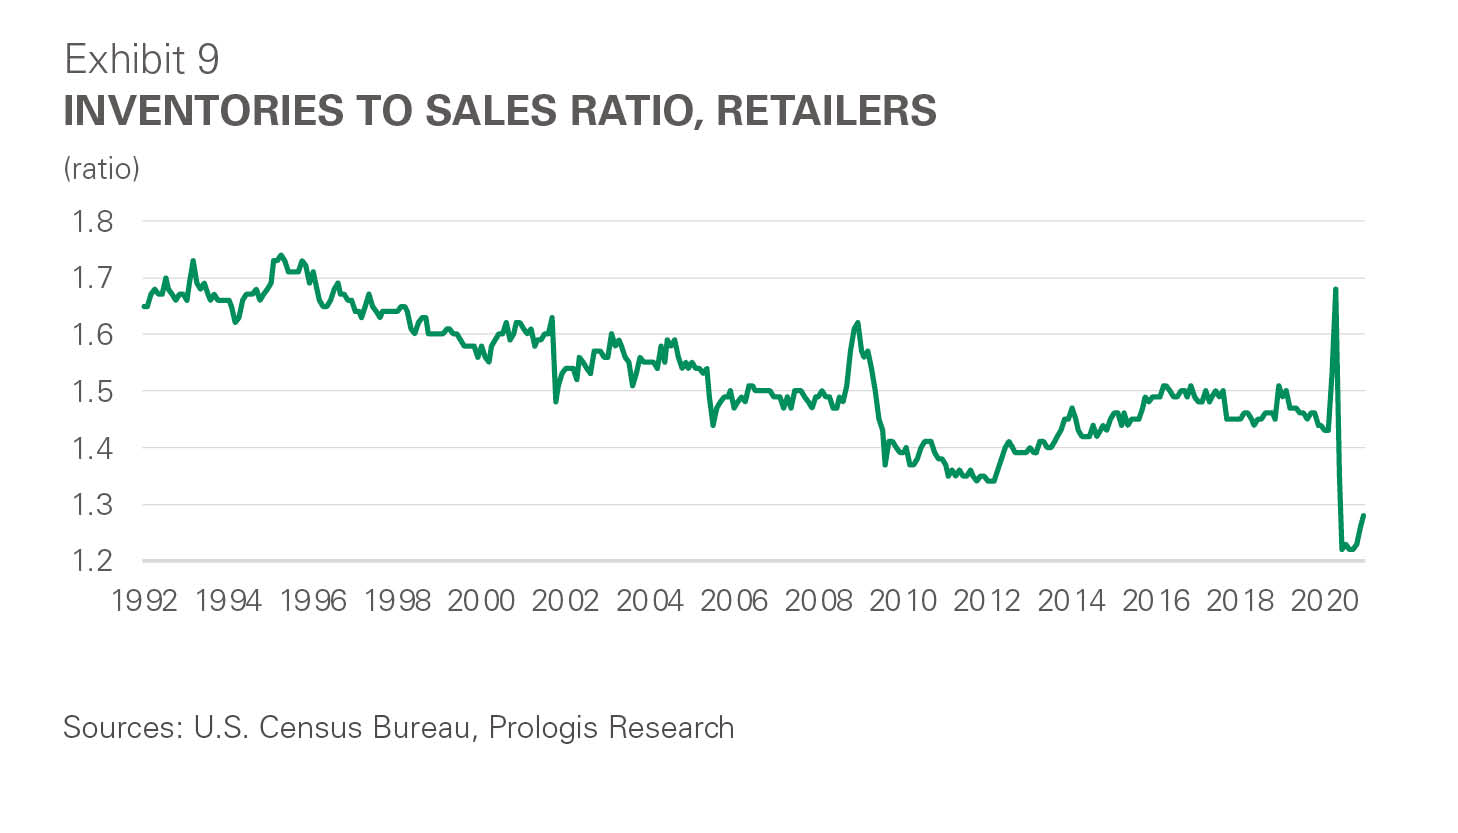 Exhibit 9: Inventories to sales ratio, retailers